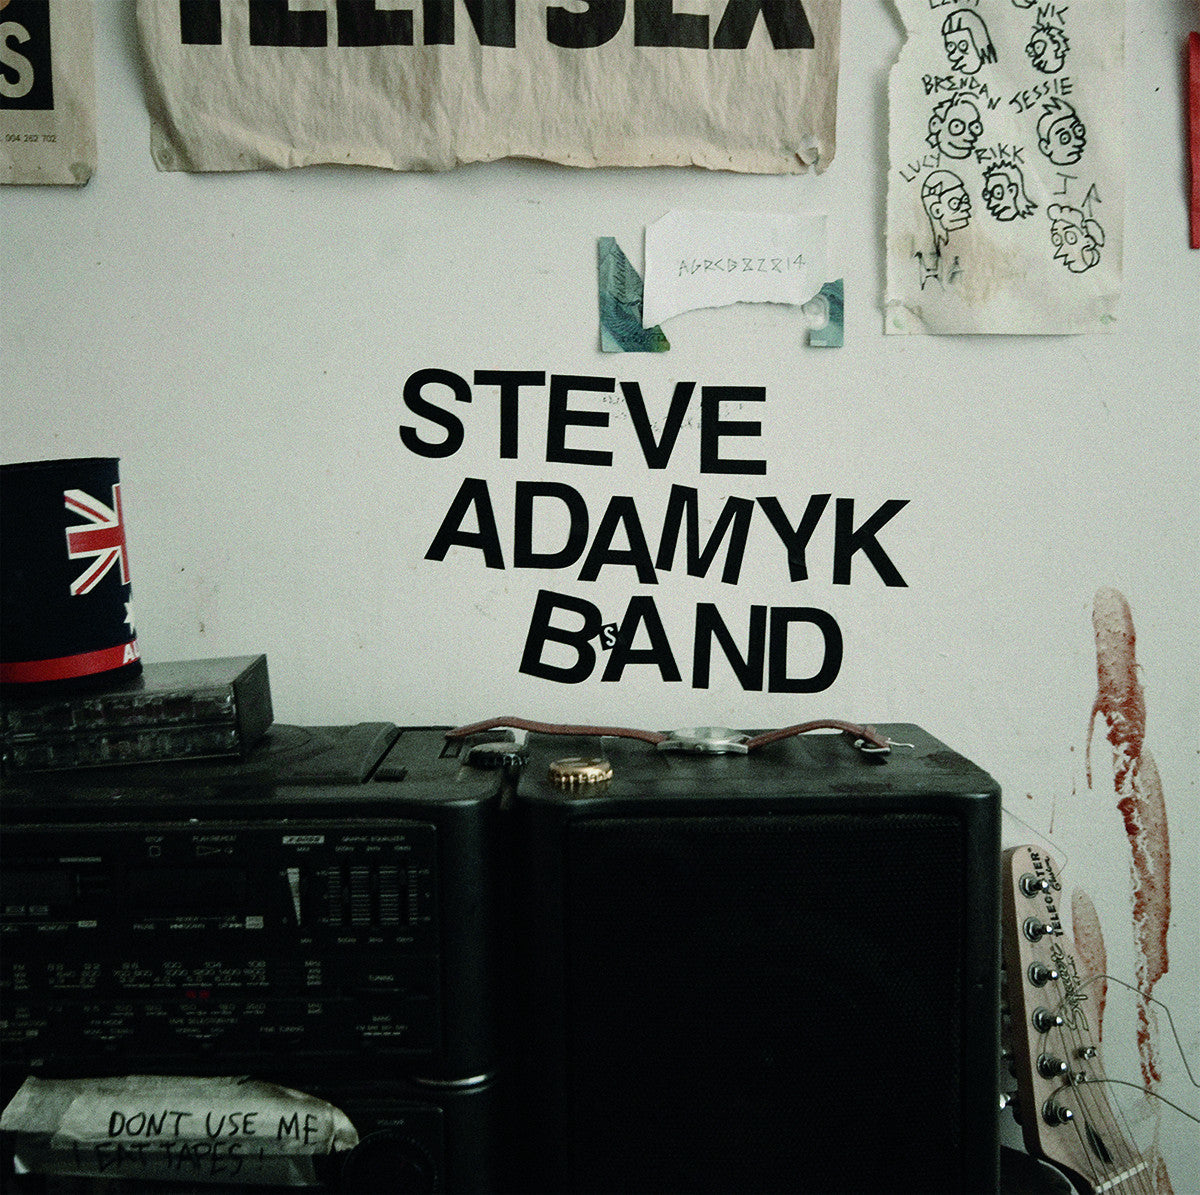 Steve Adamyk Band - Graceland - New LP